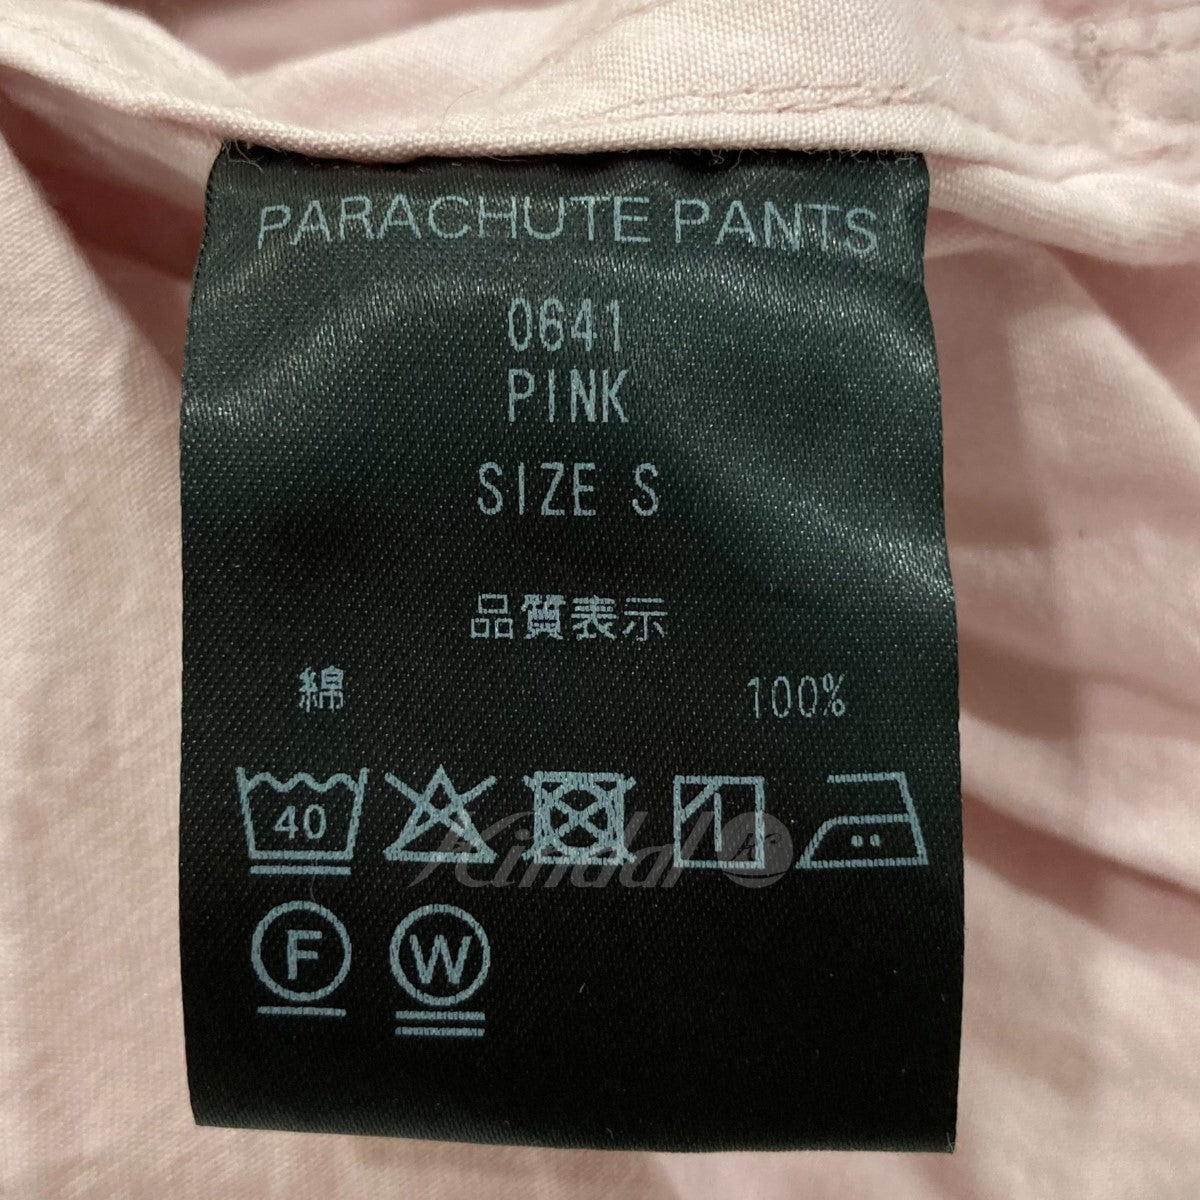 THE SHISHIKUI(シシクイ) パラシュートパンツ 0641 0641 ピンク サイズ 